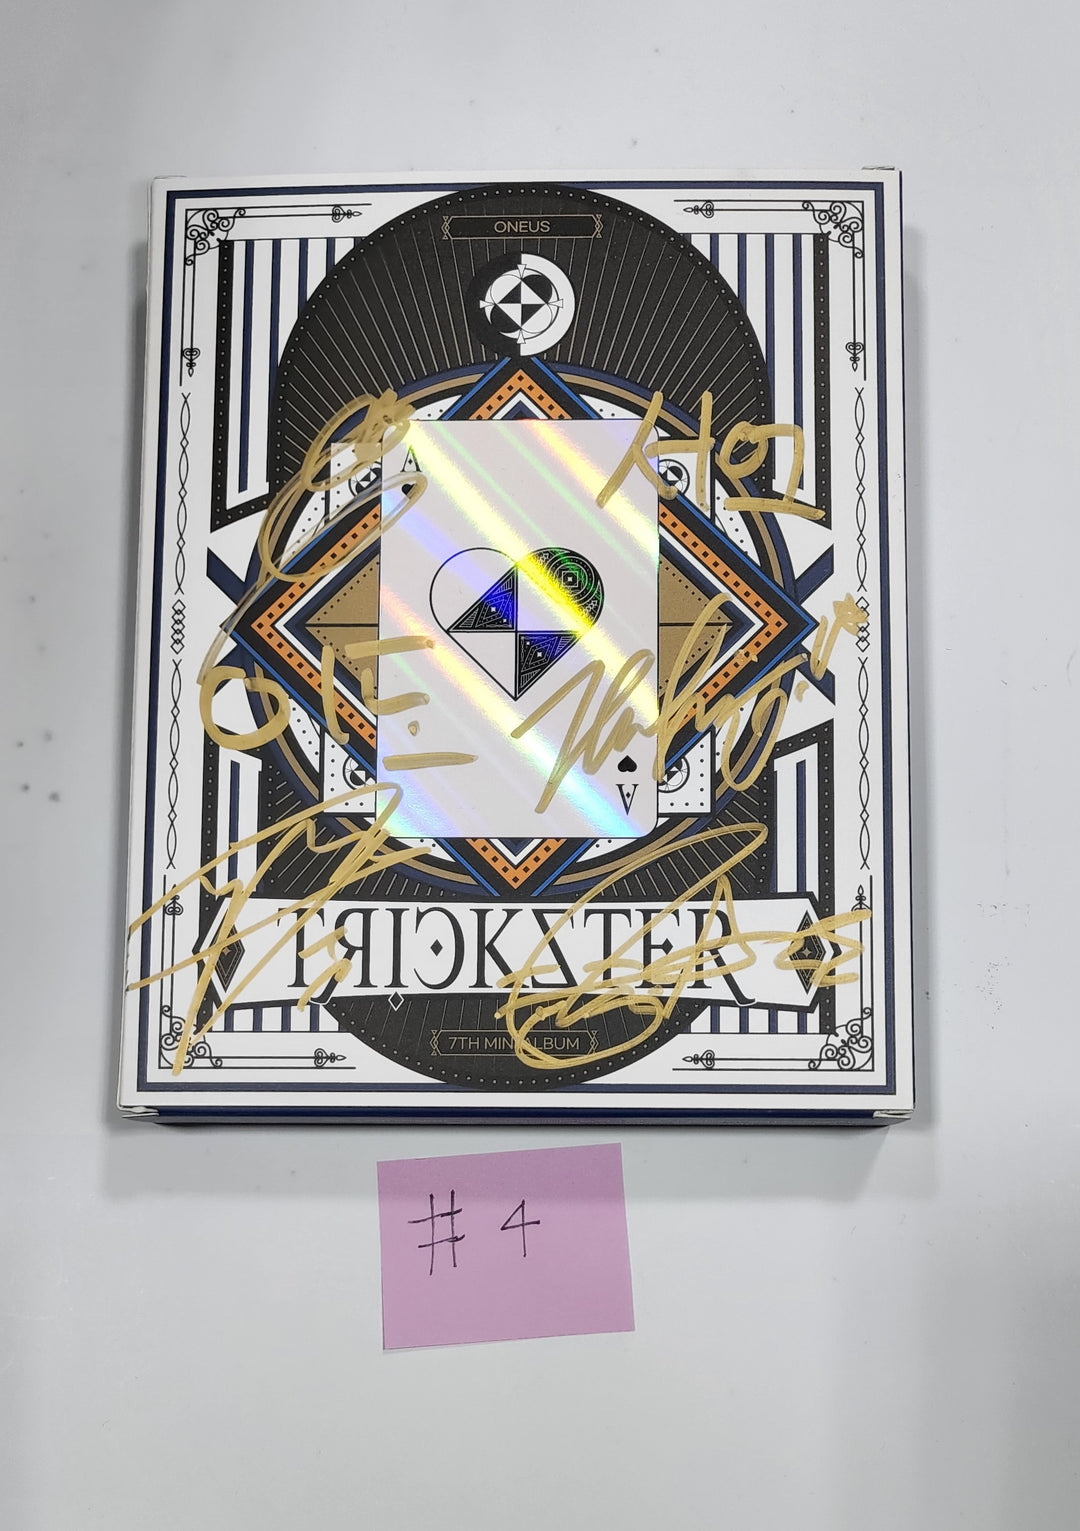 Oneus "TRICKSTER" 7th Mini - Hand Autographed(Signed) Promo Album